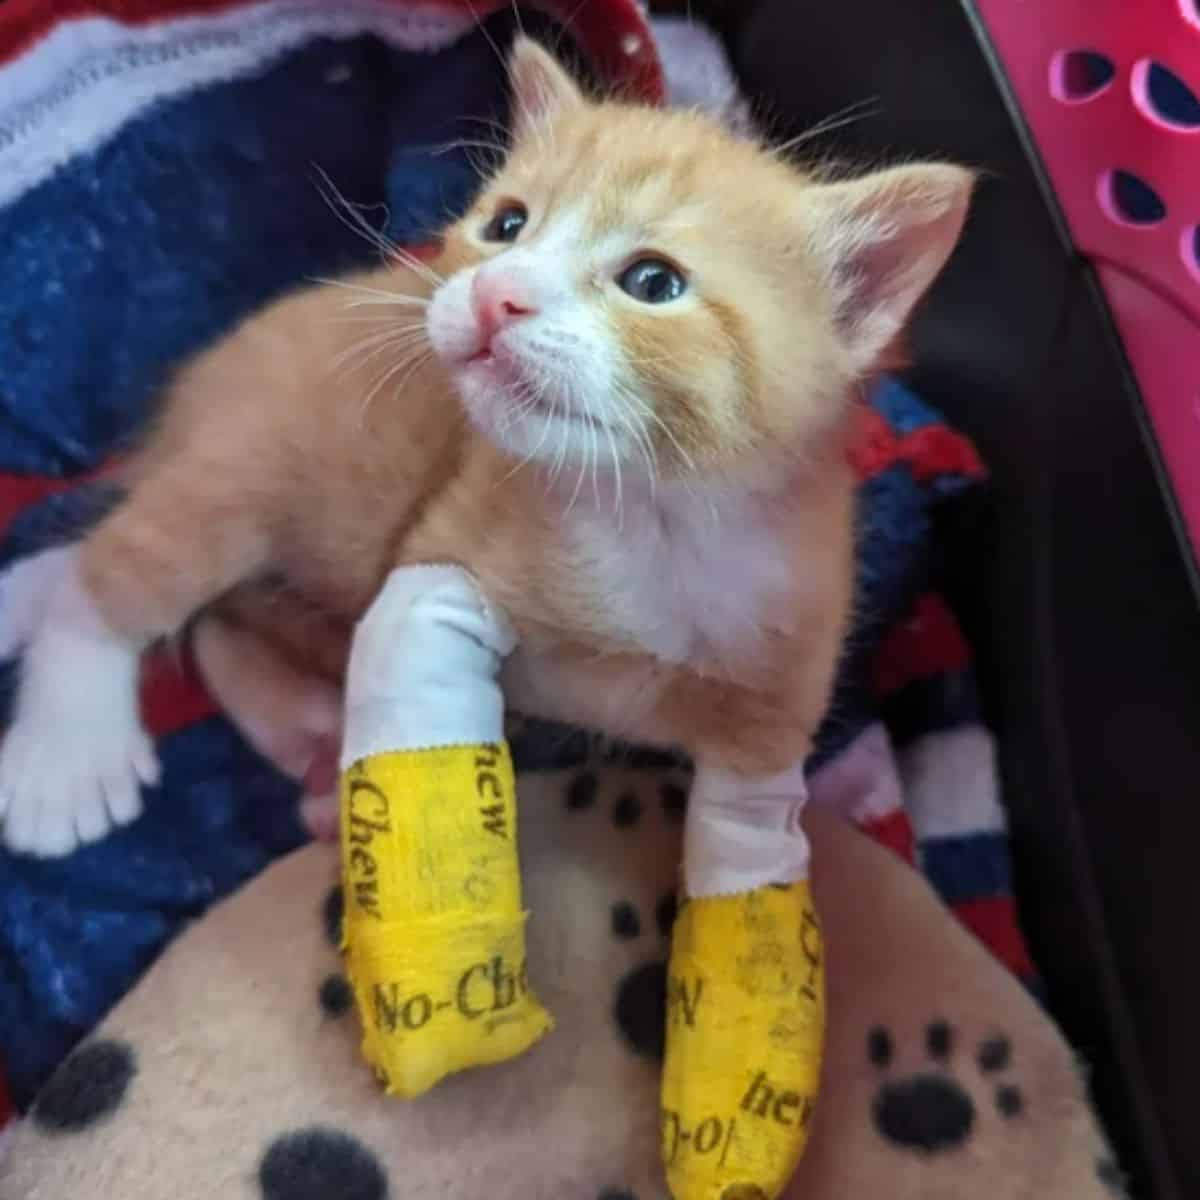 kitten with injured paws